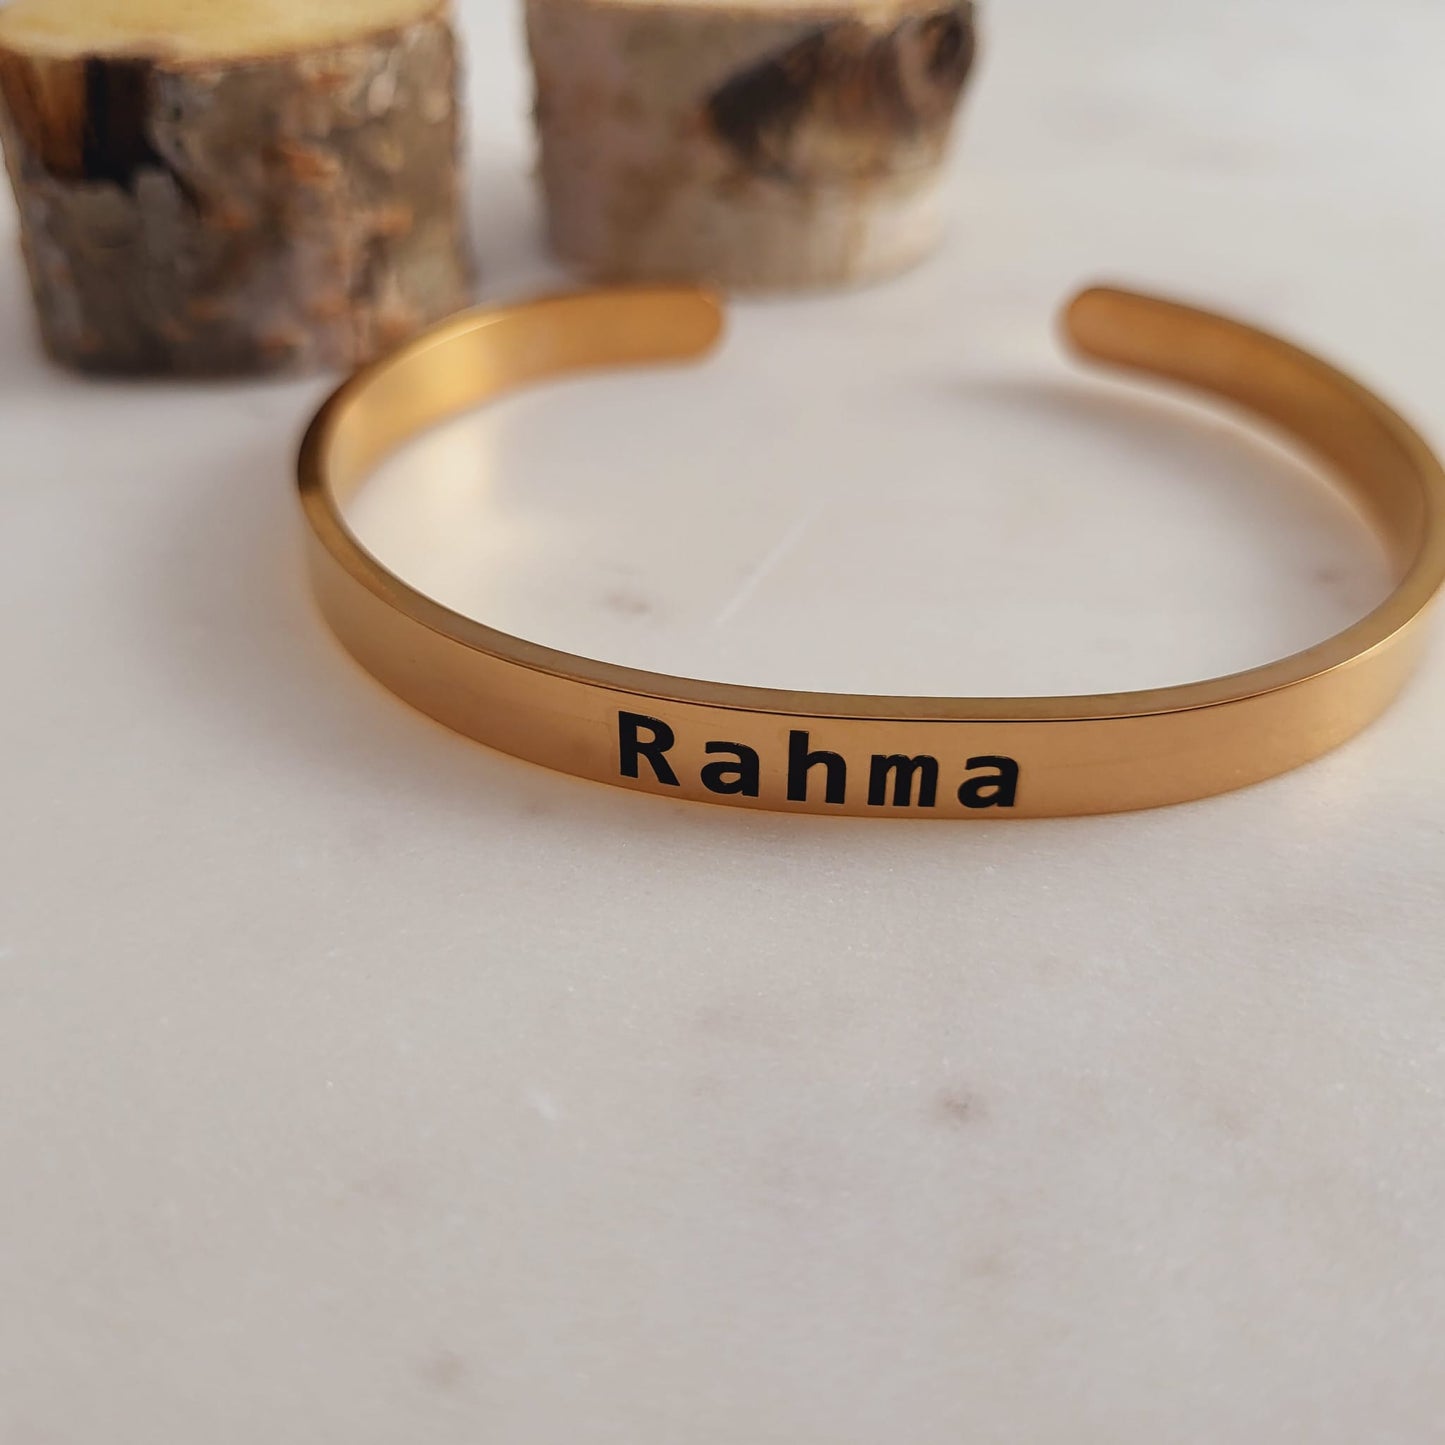 Ramadan Eid Gifts - RAHMA Bracelet Muslim Islamic Bracelet Gift